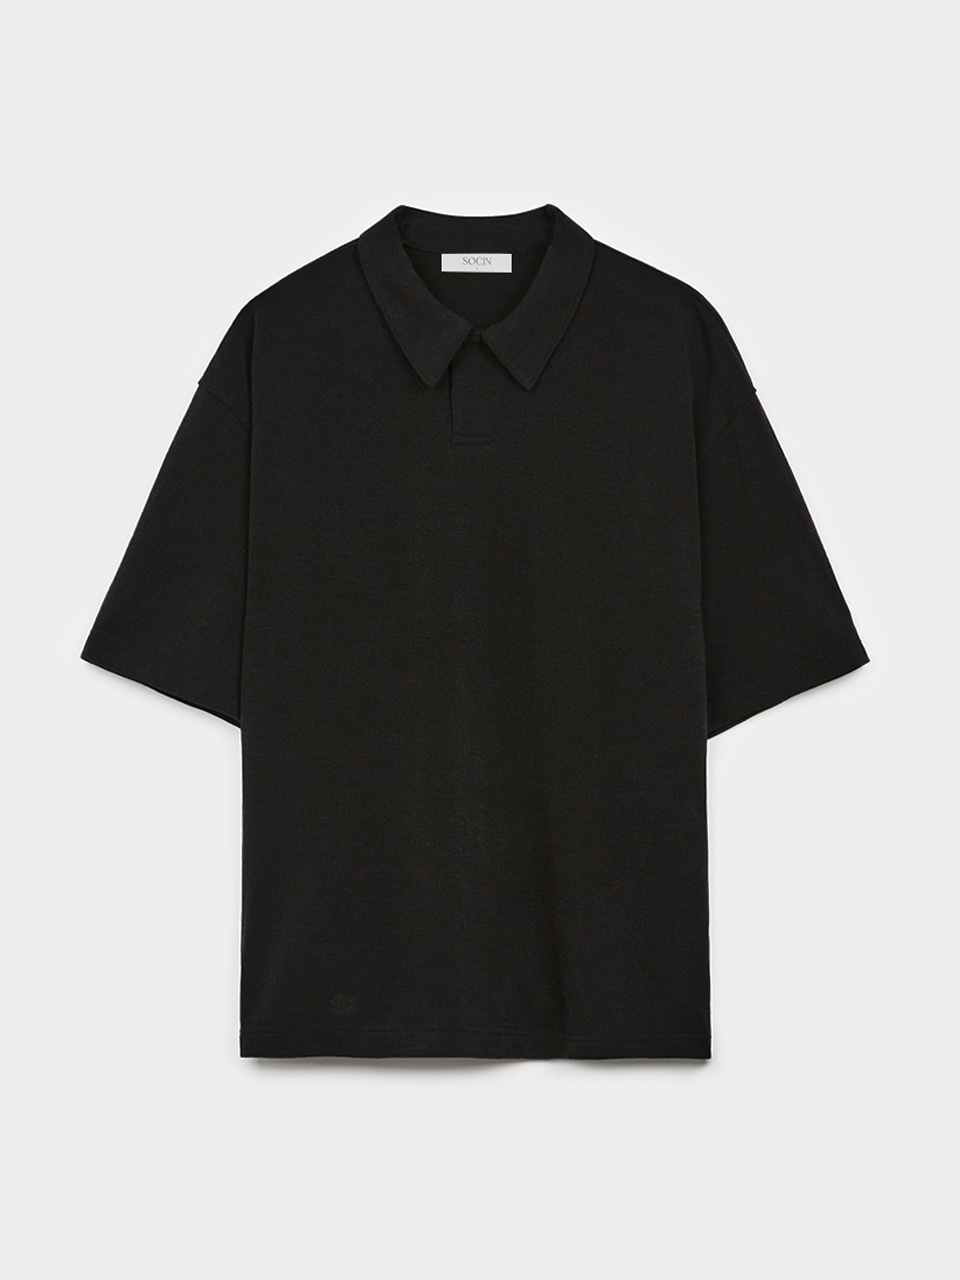 Soutien Collar Half T-shirts (Black)